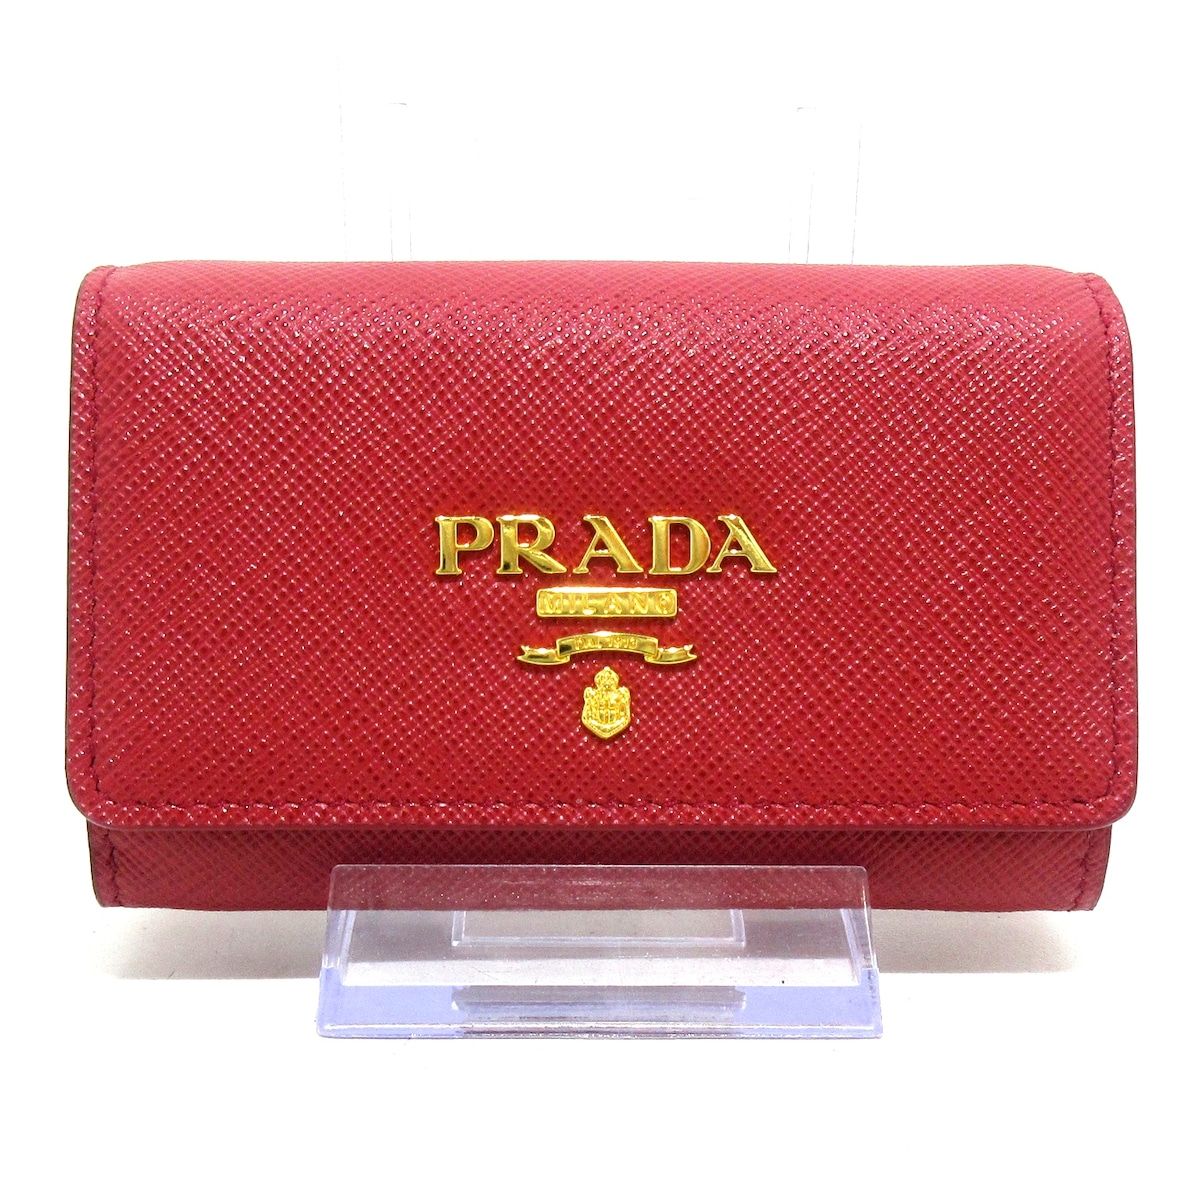 PRADA(プラダ) カードケース美品 - 1MH027 レッド サフィアーノレザー